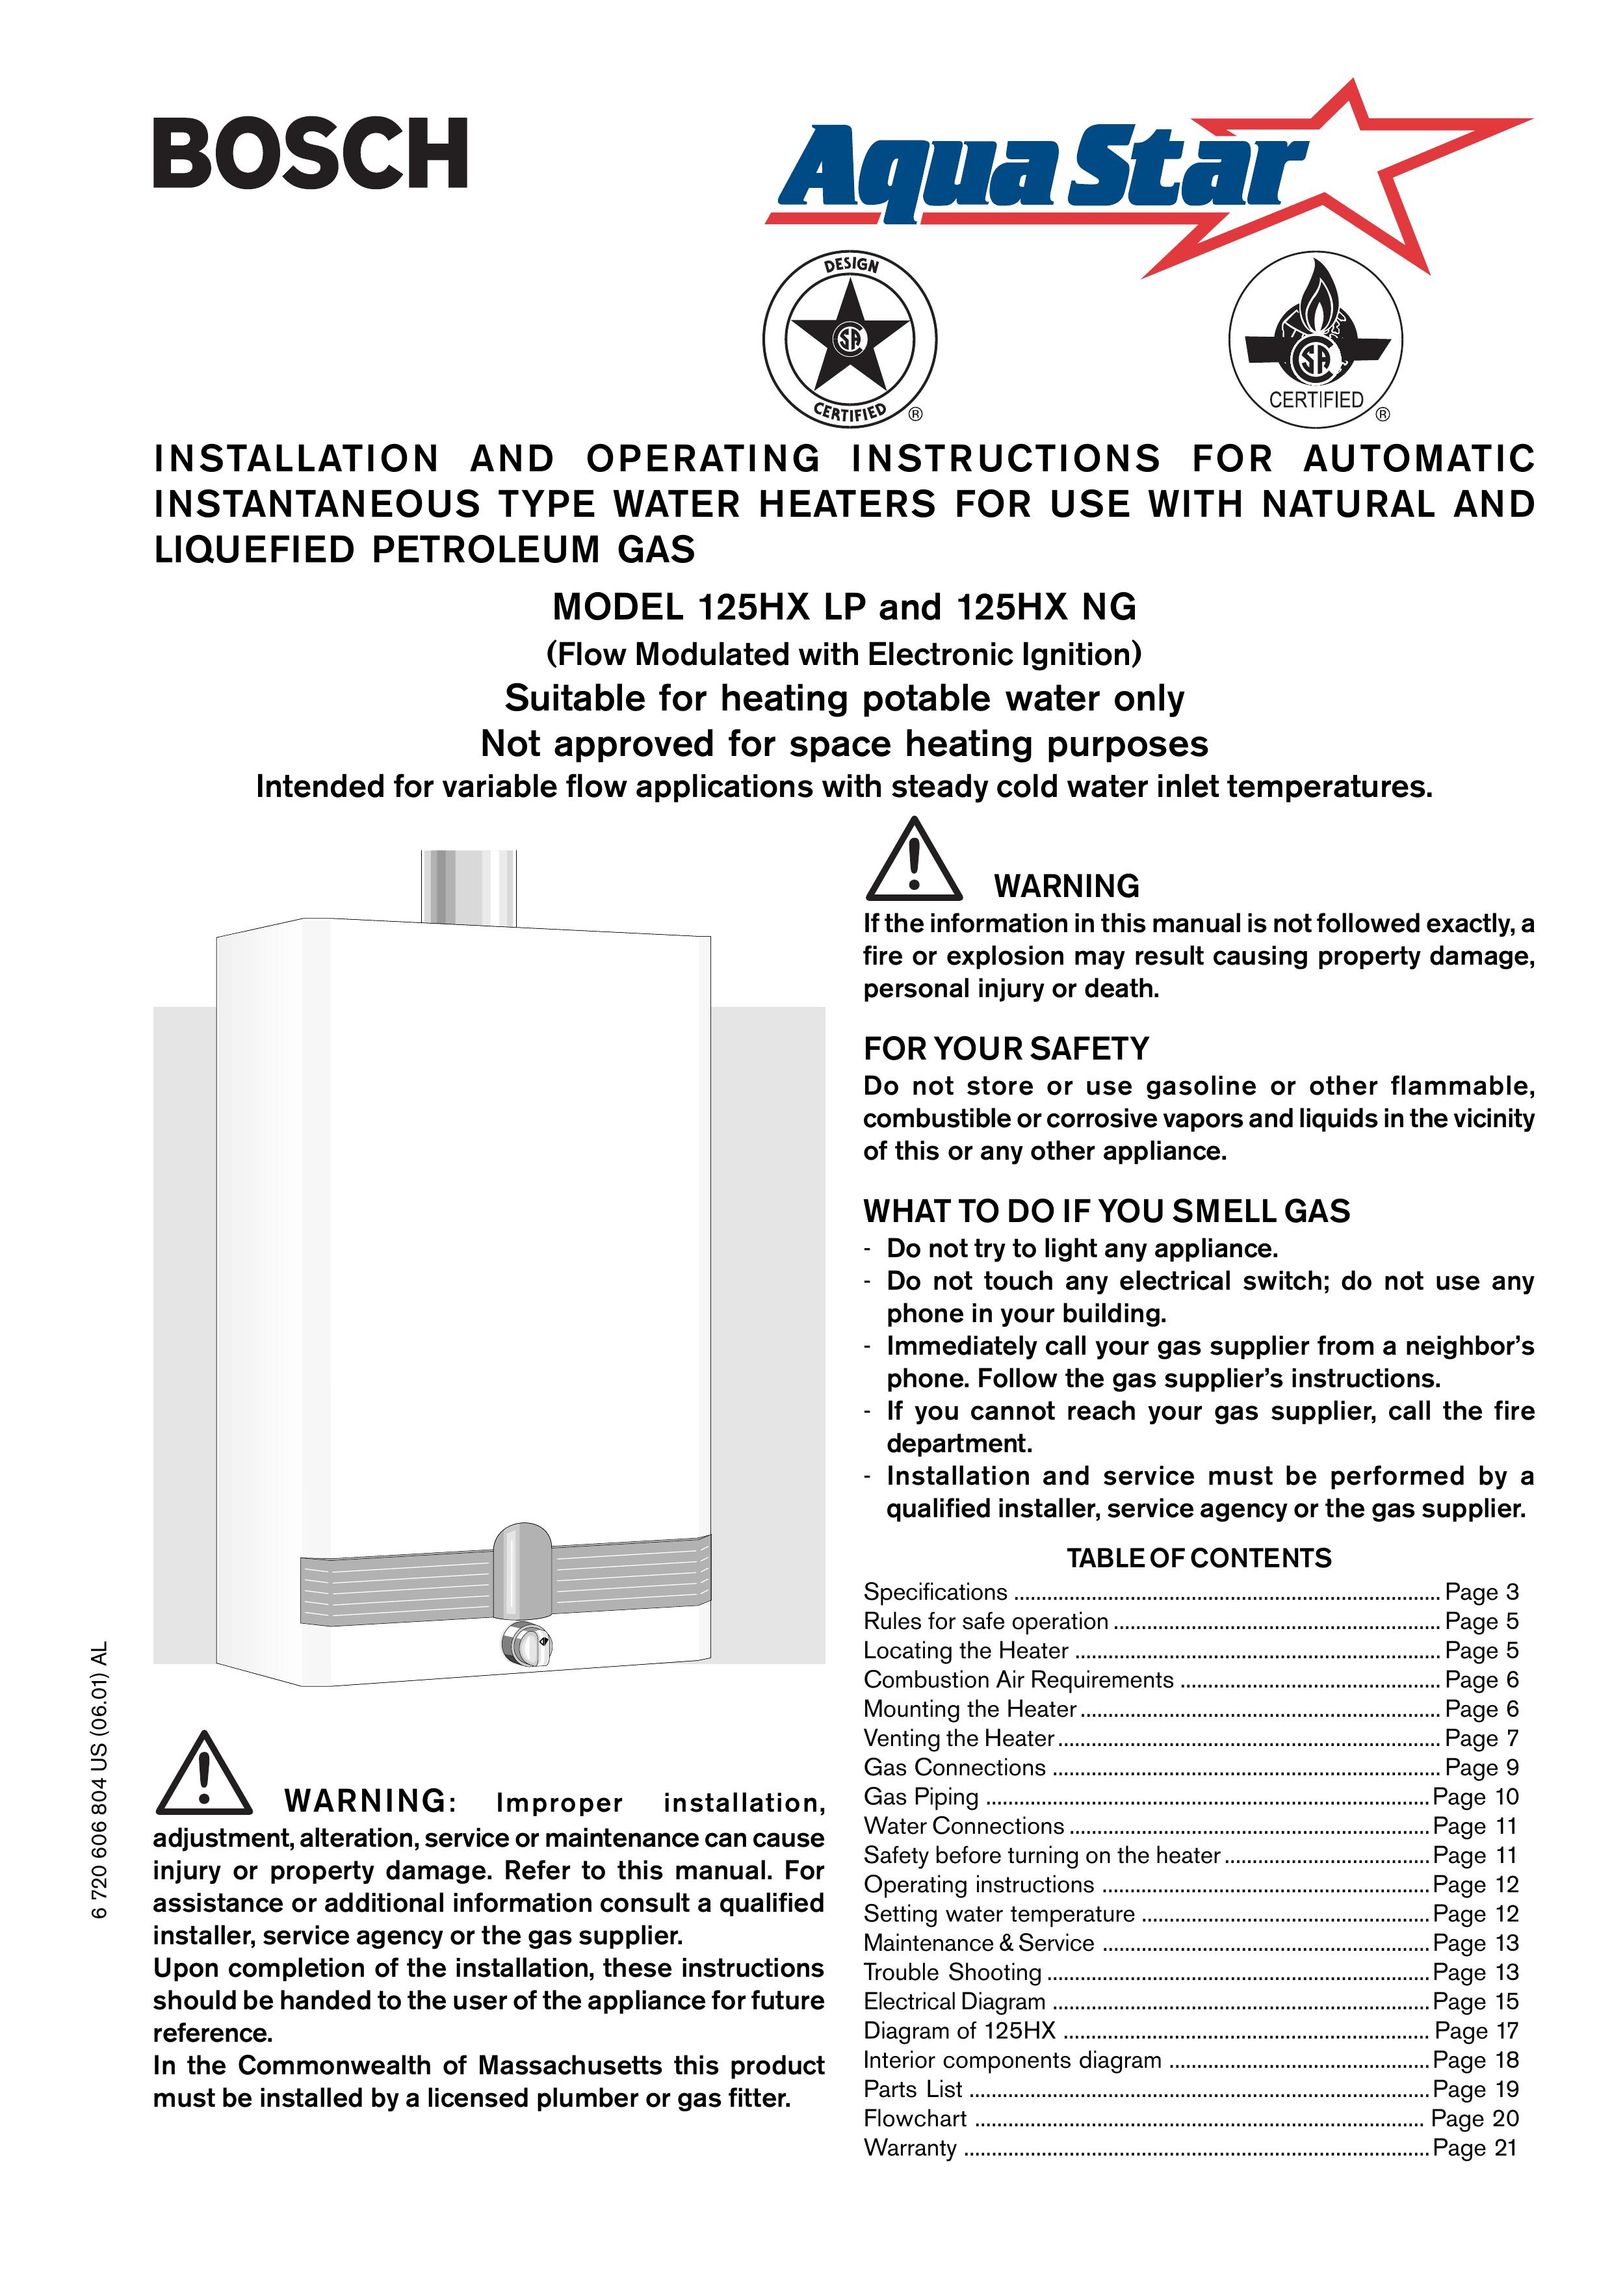 AquaStar 125HX LP Water Heater User Manual